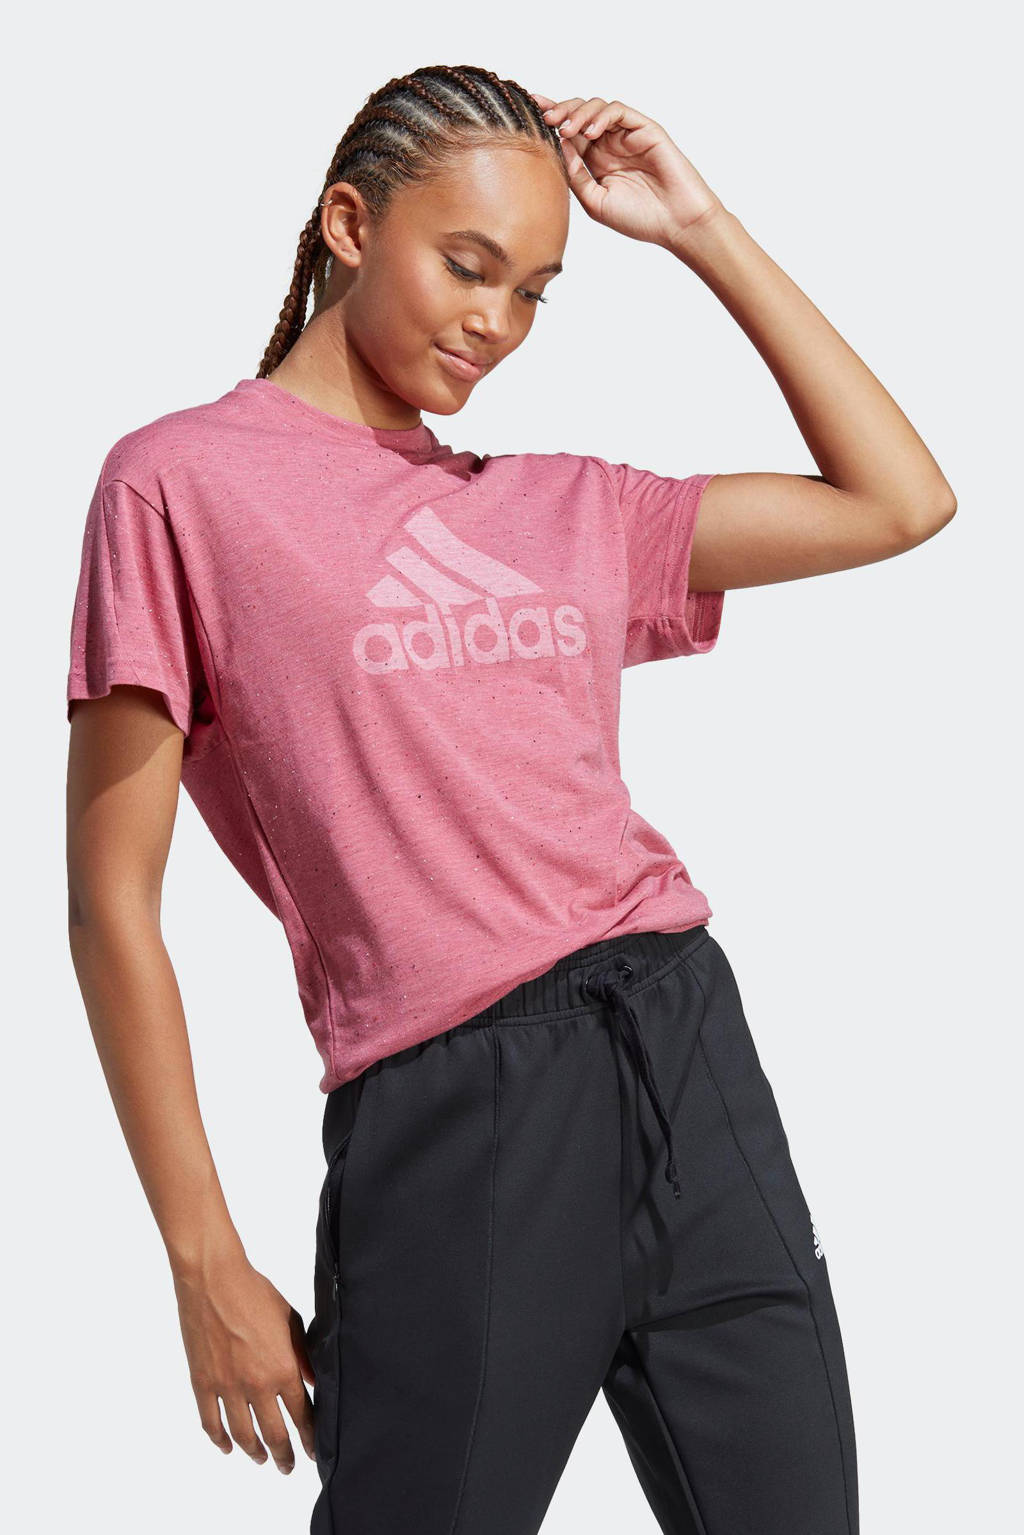 solide einde houd er rekening mee dat adidas Sportswear T-shirt roze melange | wehkamp